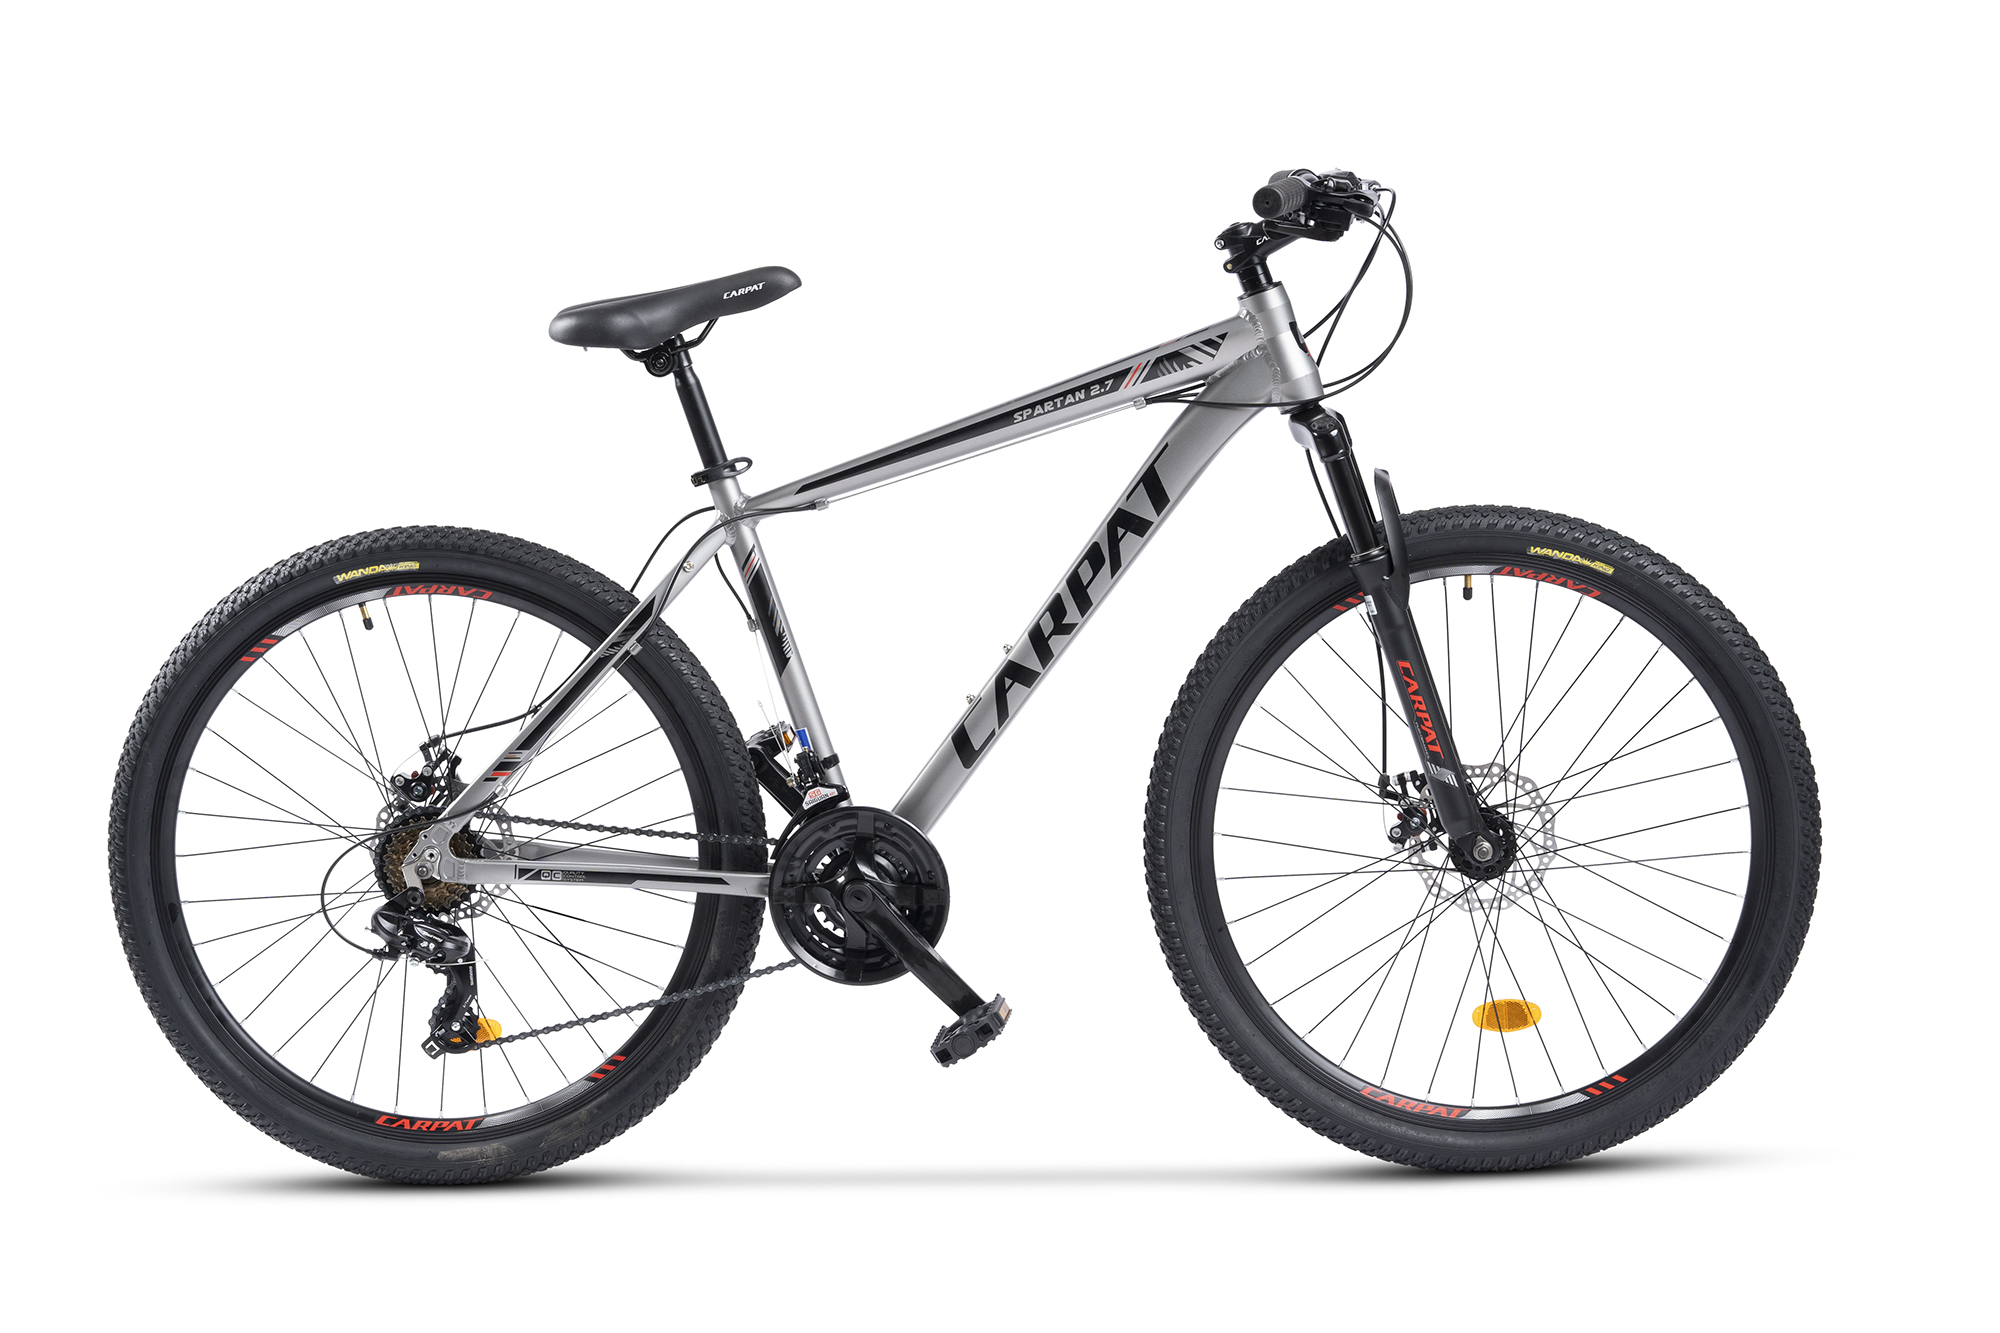 PROMO BICICLETE - Bicicleta MTB-HT CARPAT Spartan C2759C 27.5", Gri/Rosu/Negru, https:carpatsport.ro